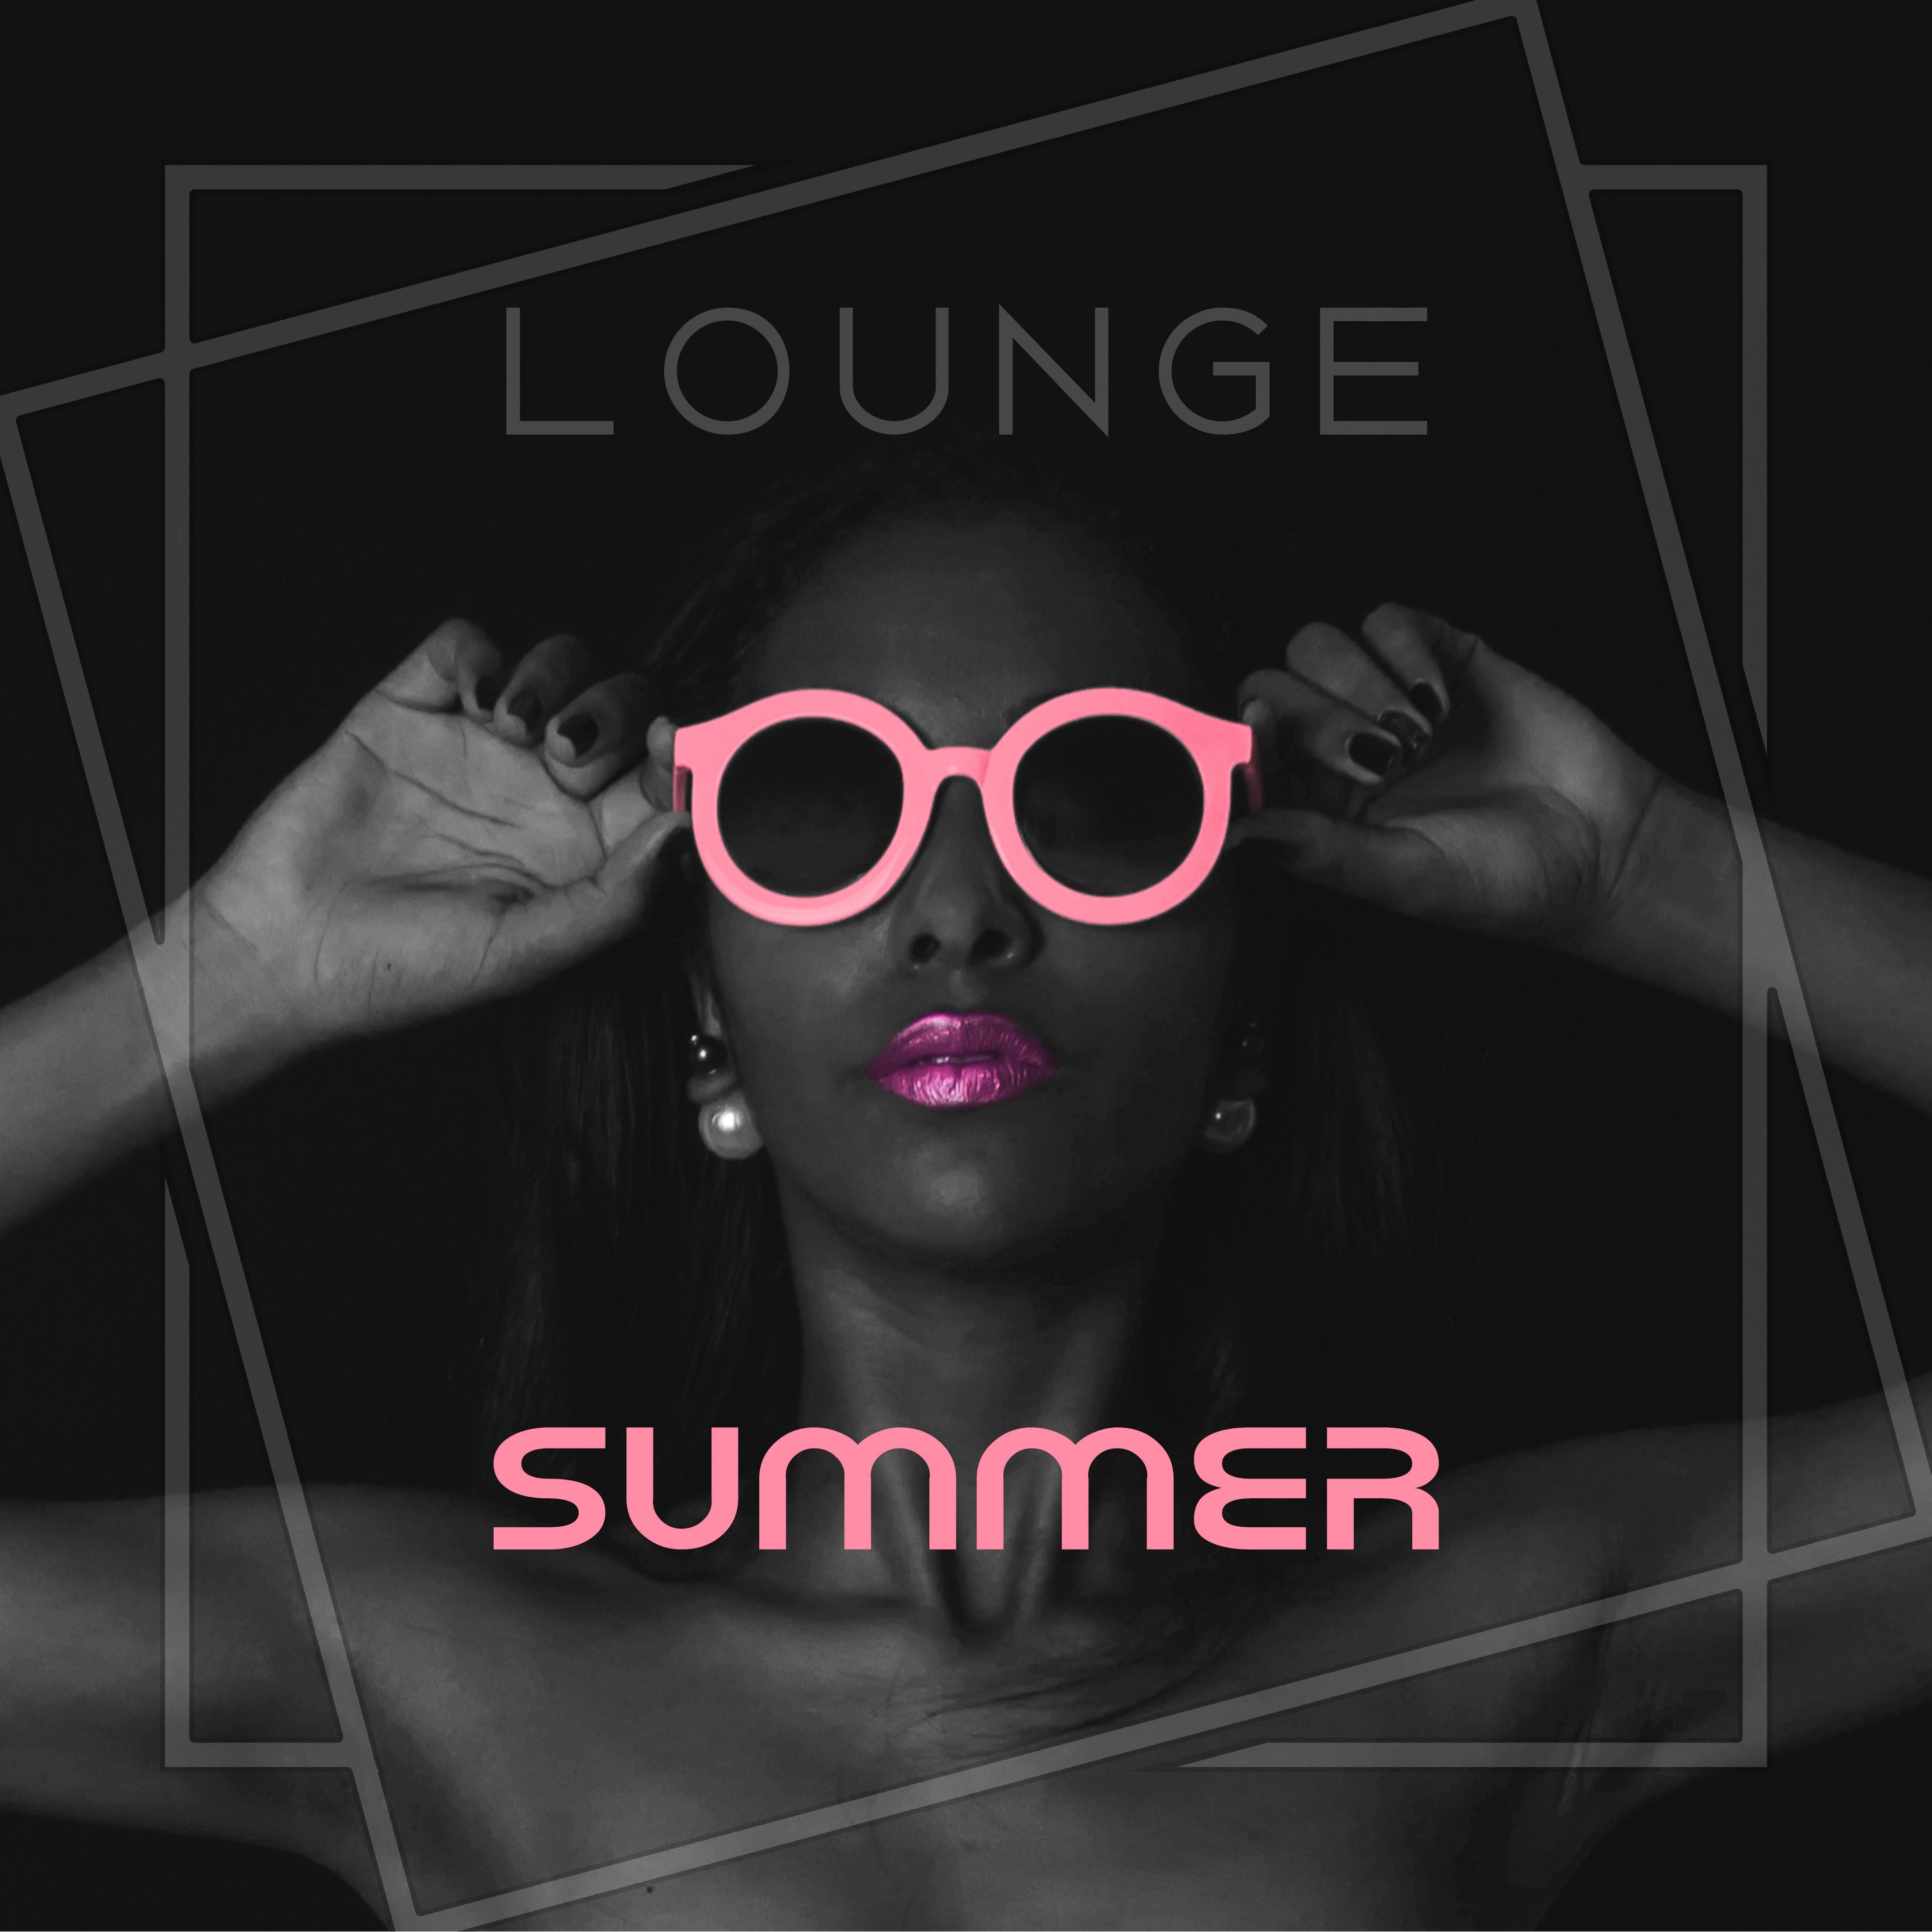 Lounge Summer – Best Chill Out Music, Beach Chill, Summertime, Pure Rest, Zen Music, Soft Sounds, Relaxation